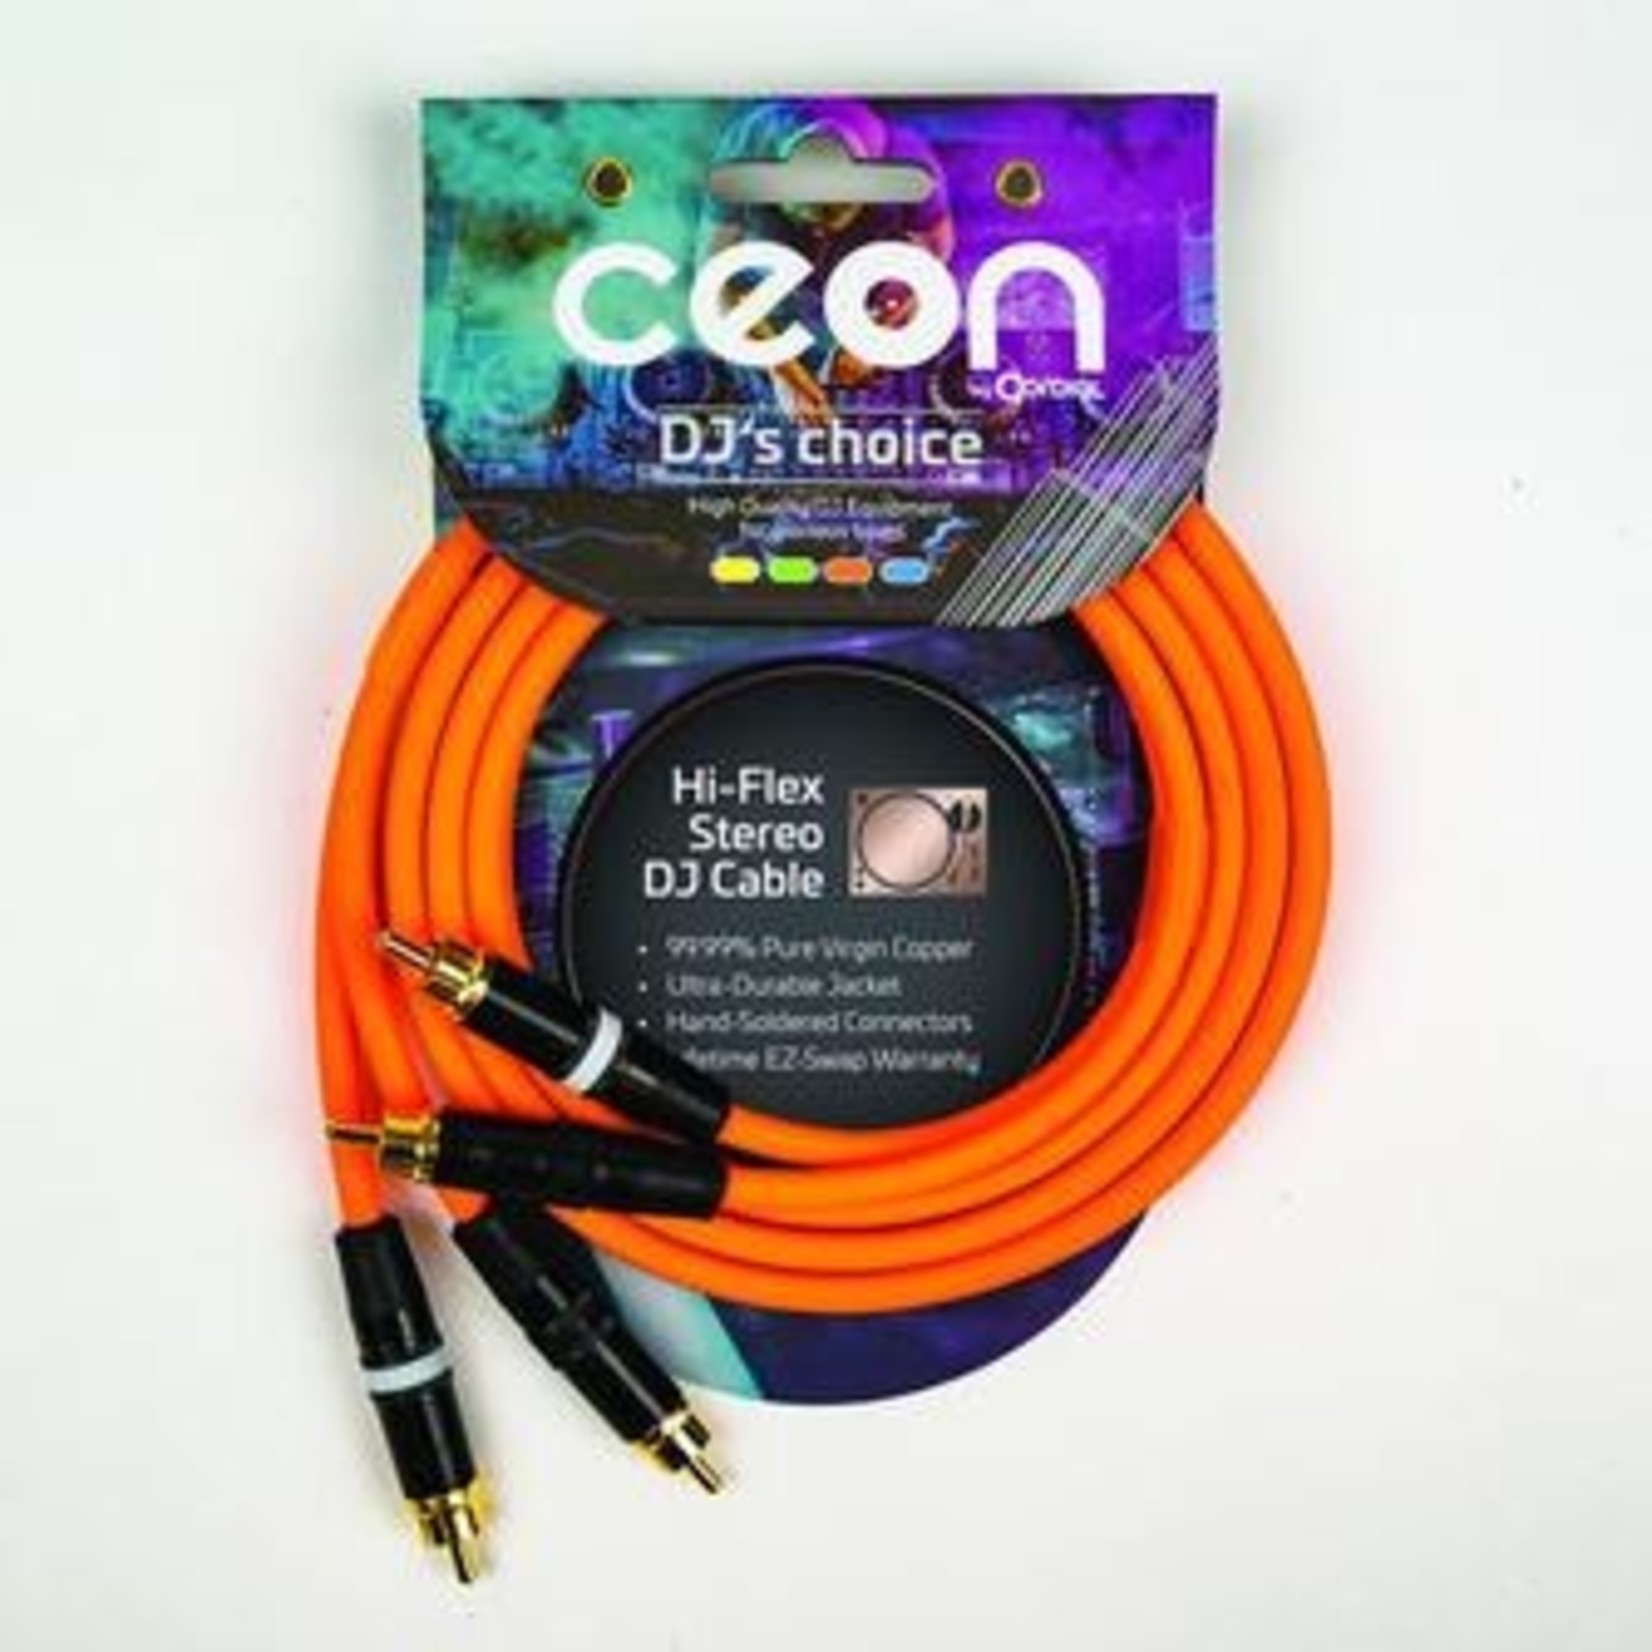 Cordial Cables Cordial Cables Premium DJ Dual/Mono (Black Light) Cable, Ceon Series - Hi-Flex DJ's Choice Stereo RCA to RCA 10-Foot Cable: Neon Orange